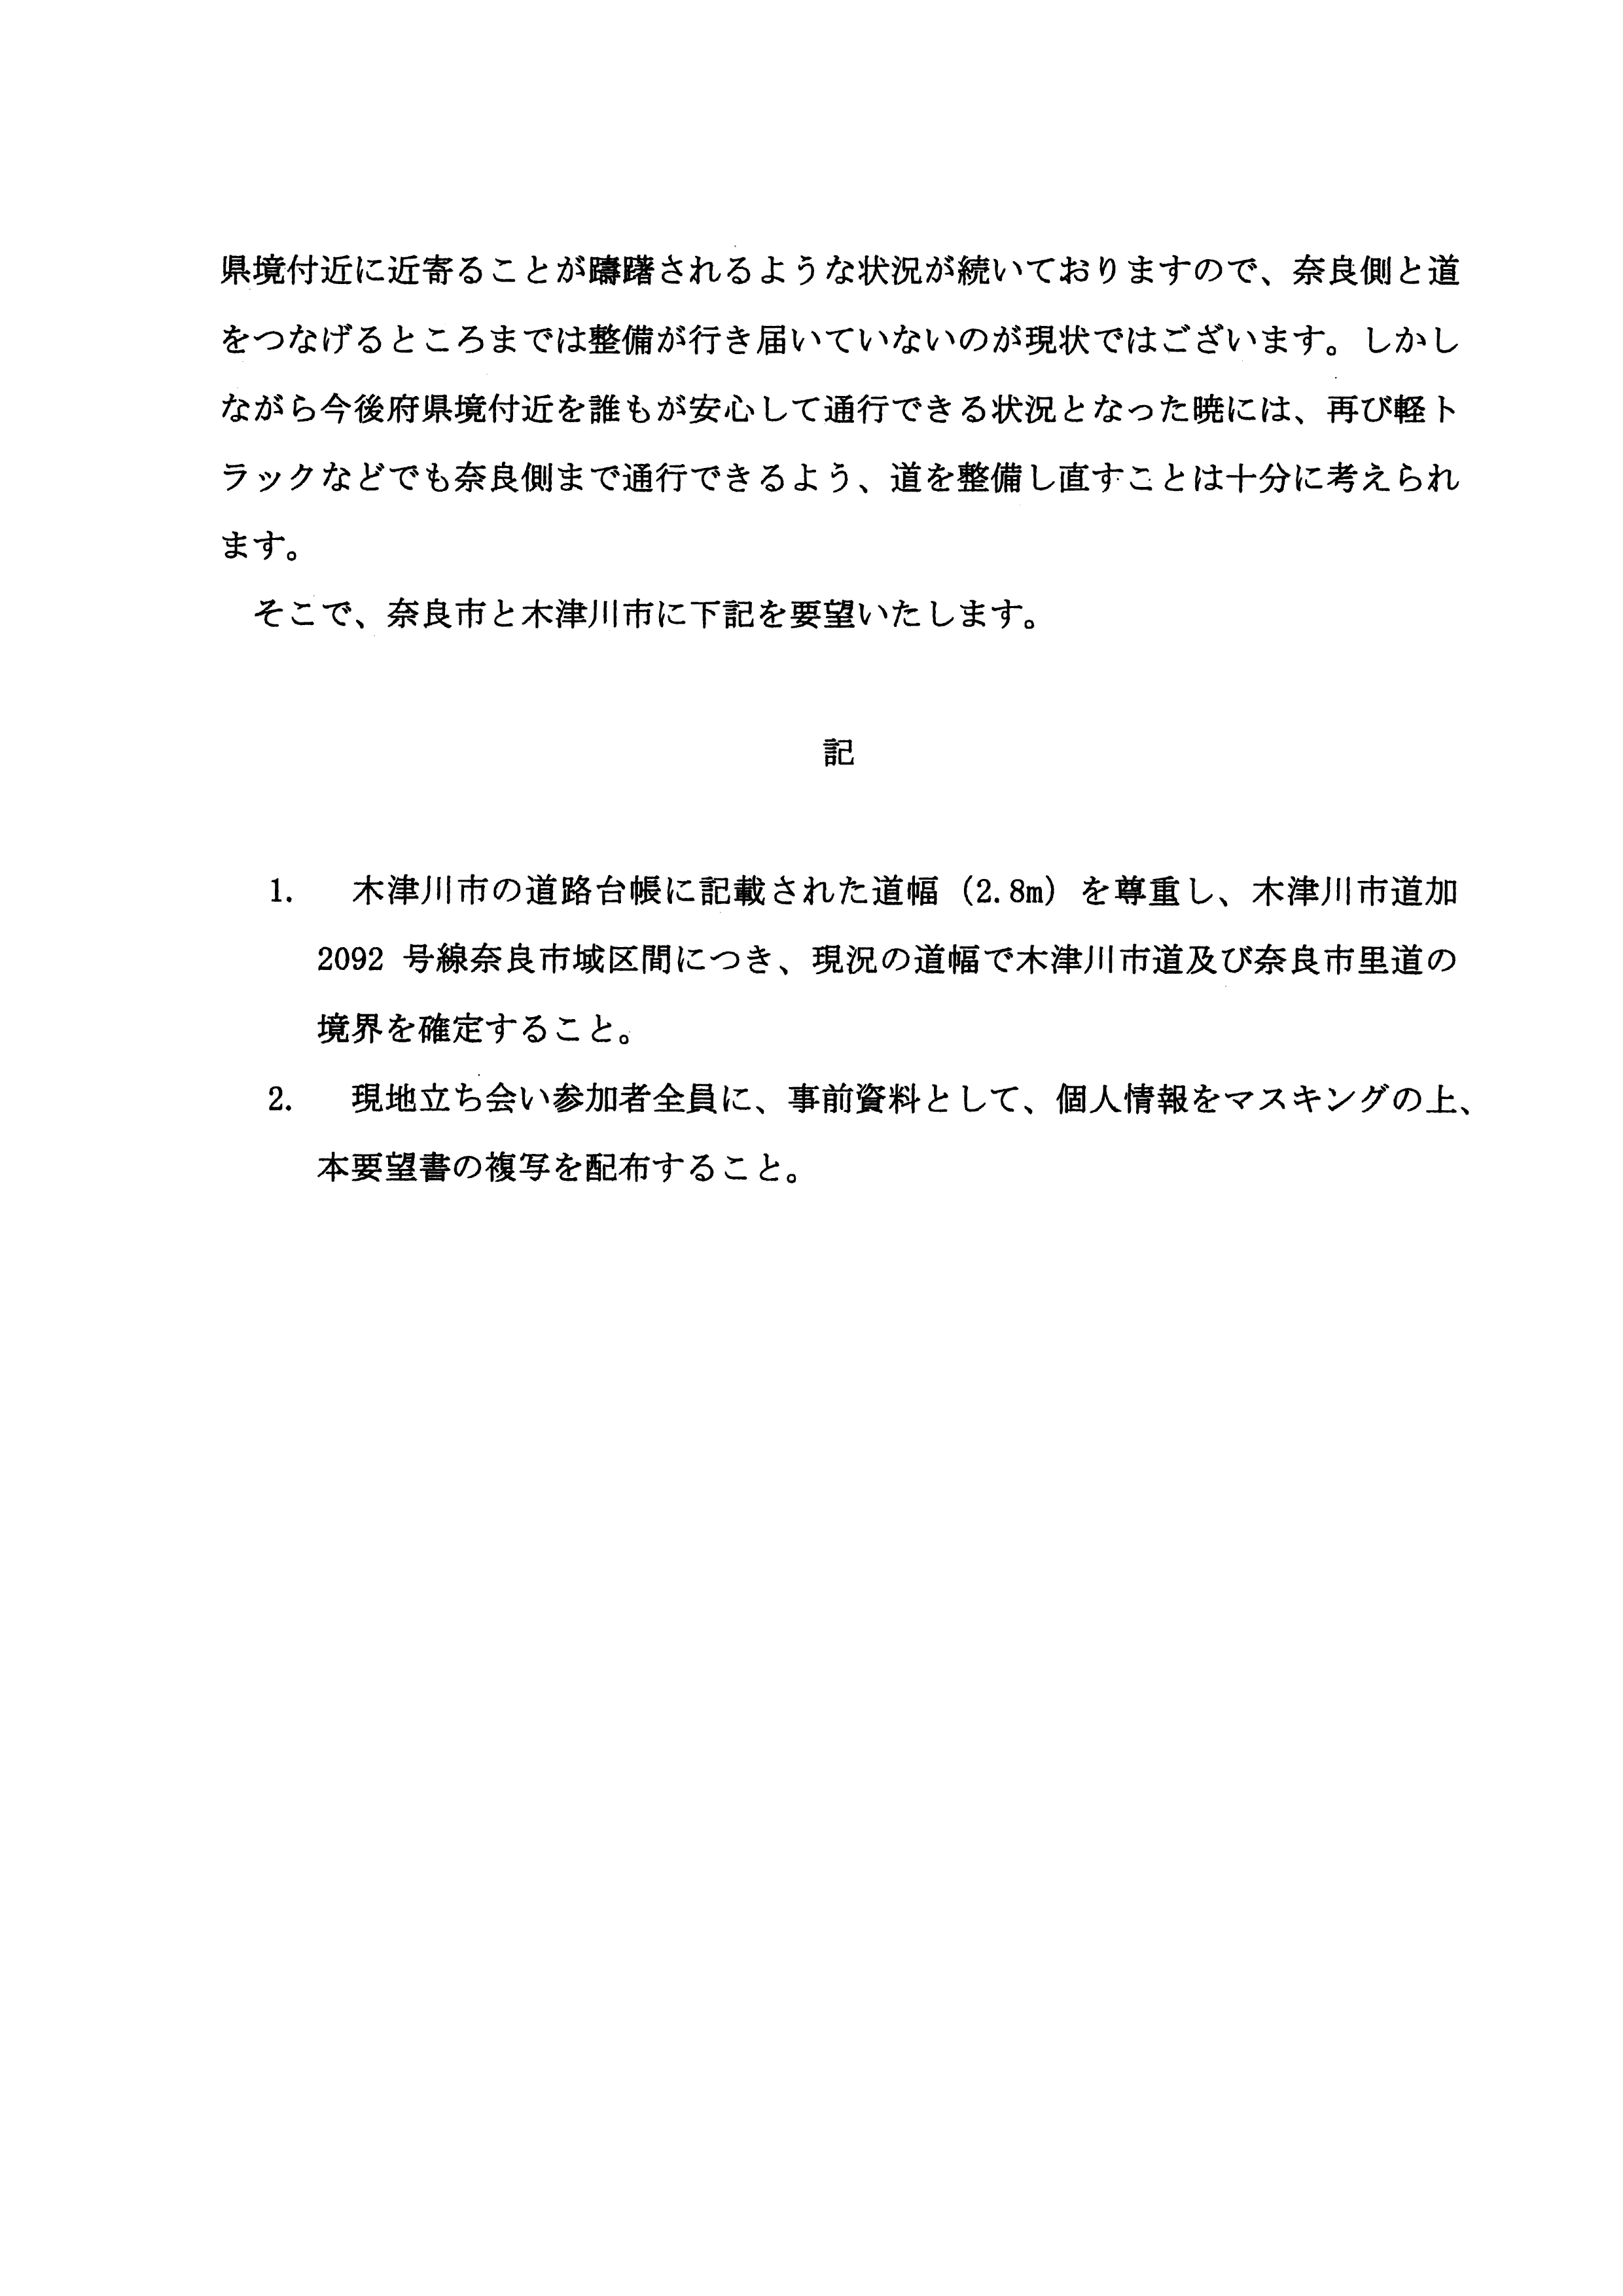 令和5(2023)年2月24日-木津川市道加2092号線奈良市域区間の境界確定に関する要望書-西小地区-02